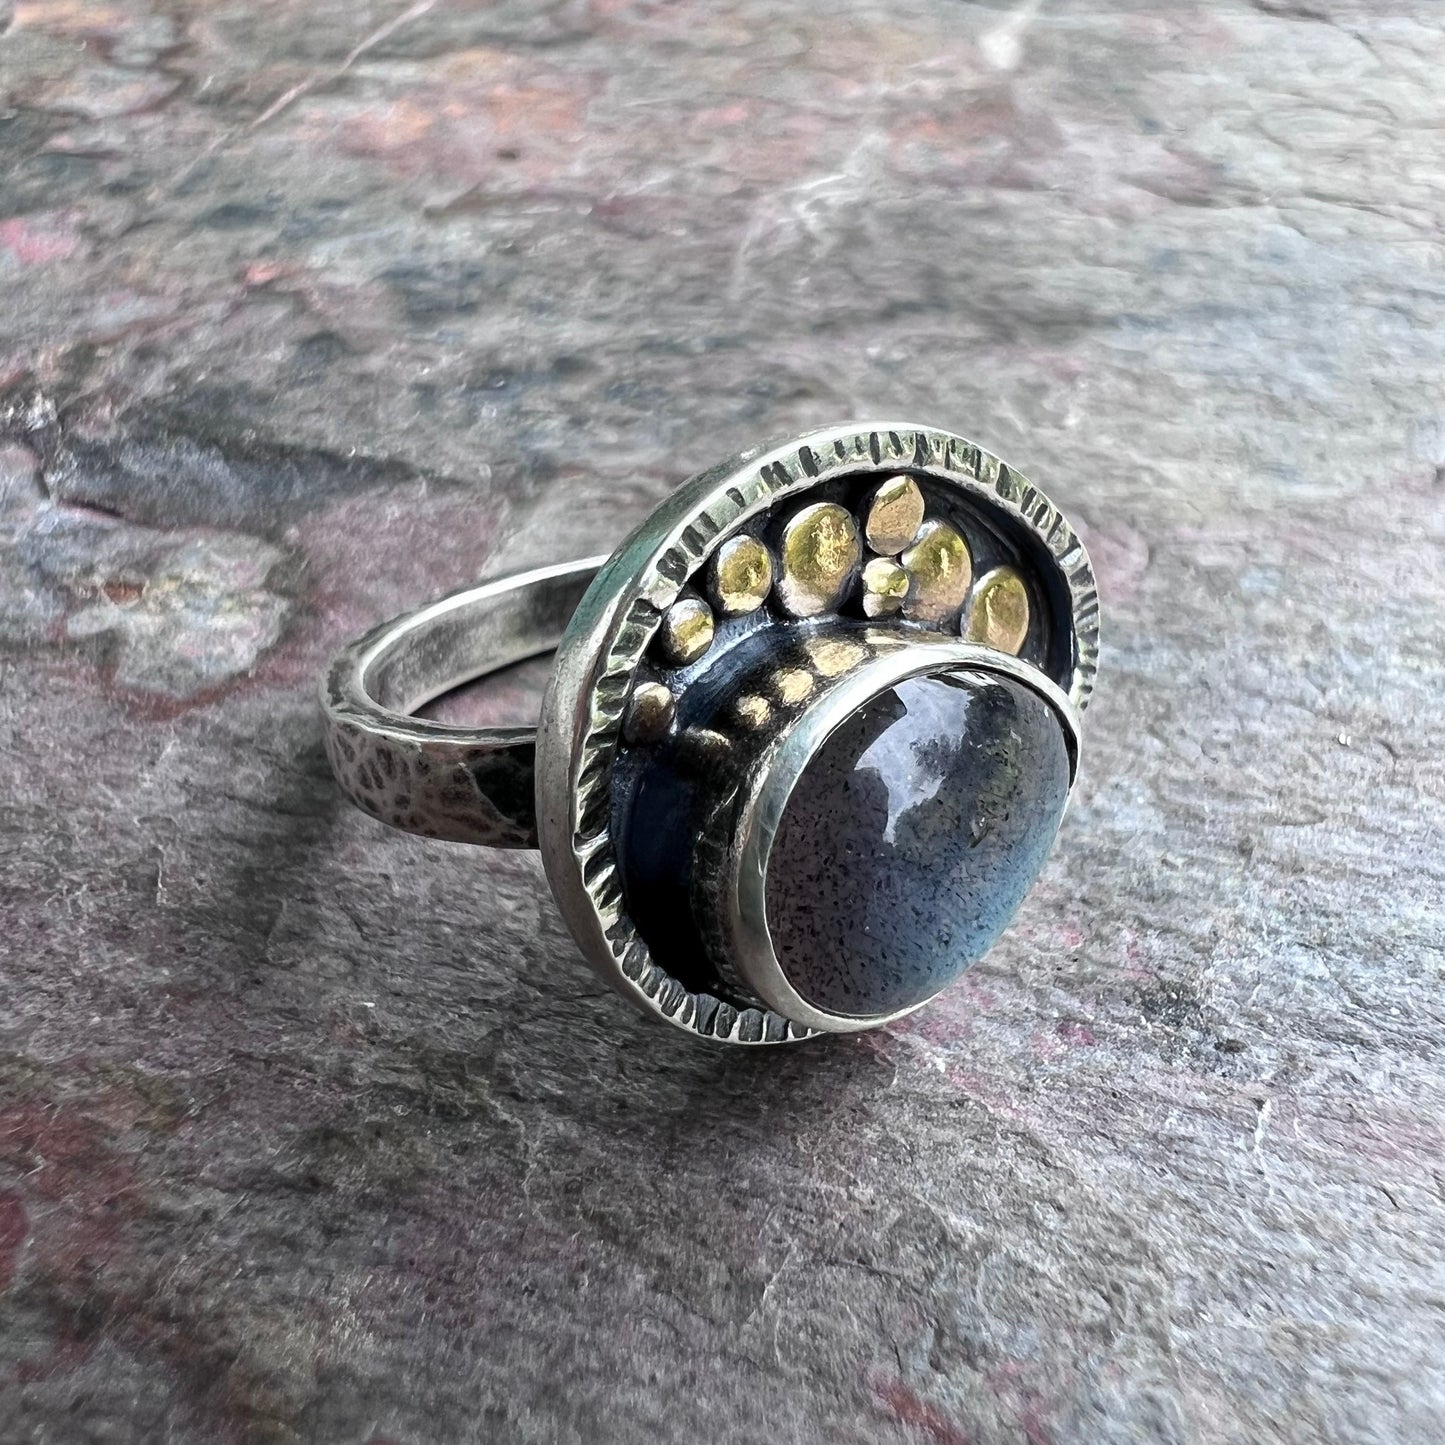 Labradorite Sterling Silver Ring - Handmade One-of-a-kind Labradorite Mixed Metal Ring